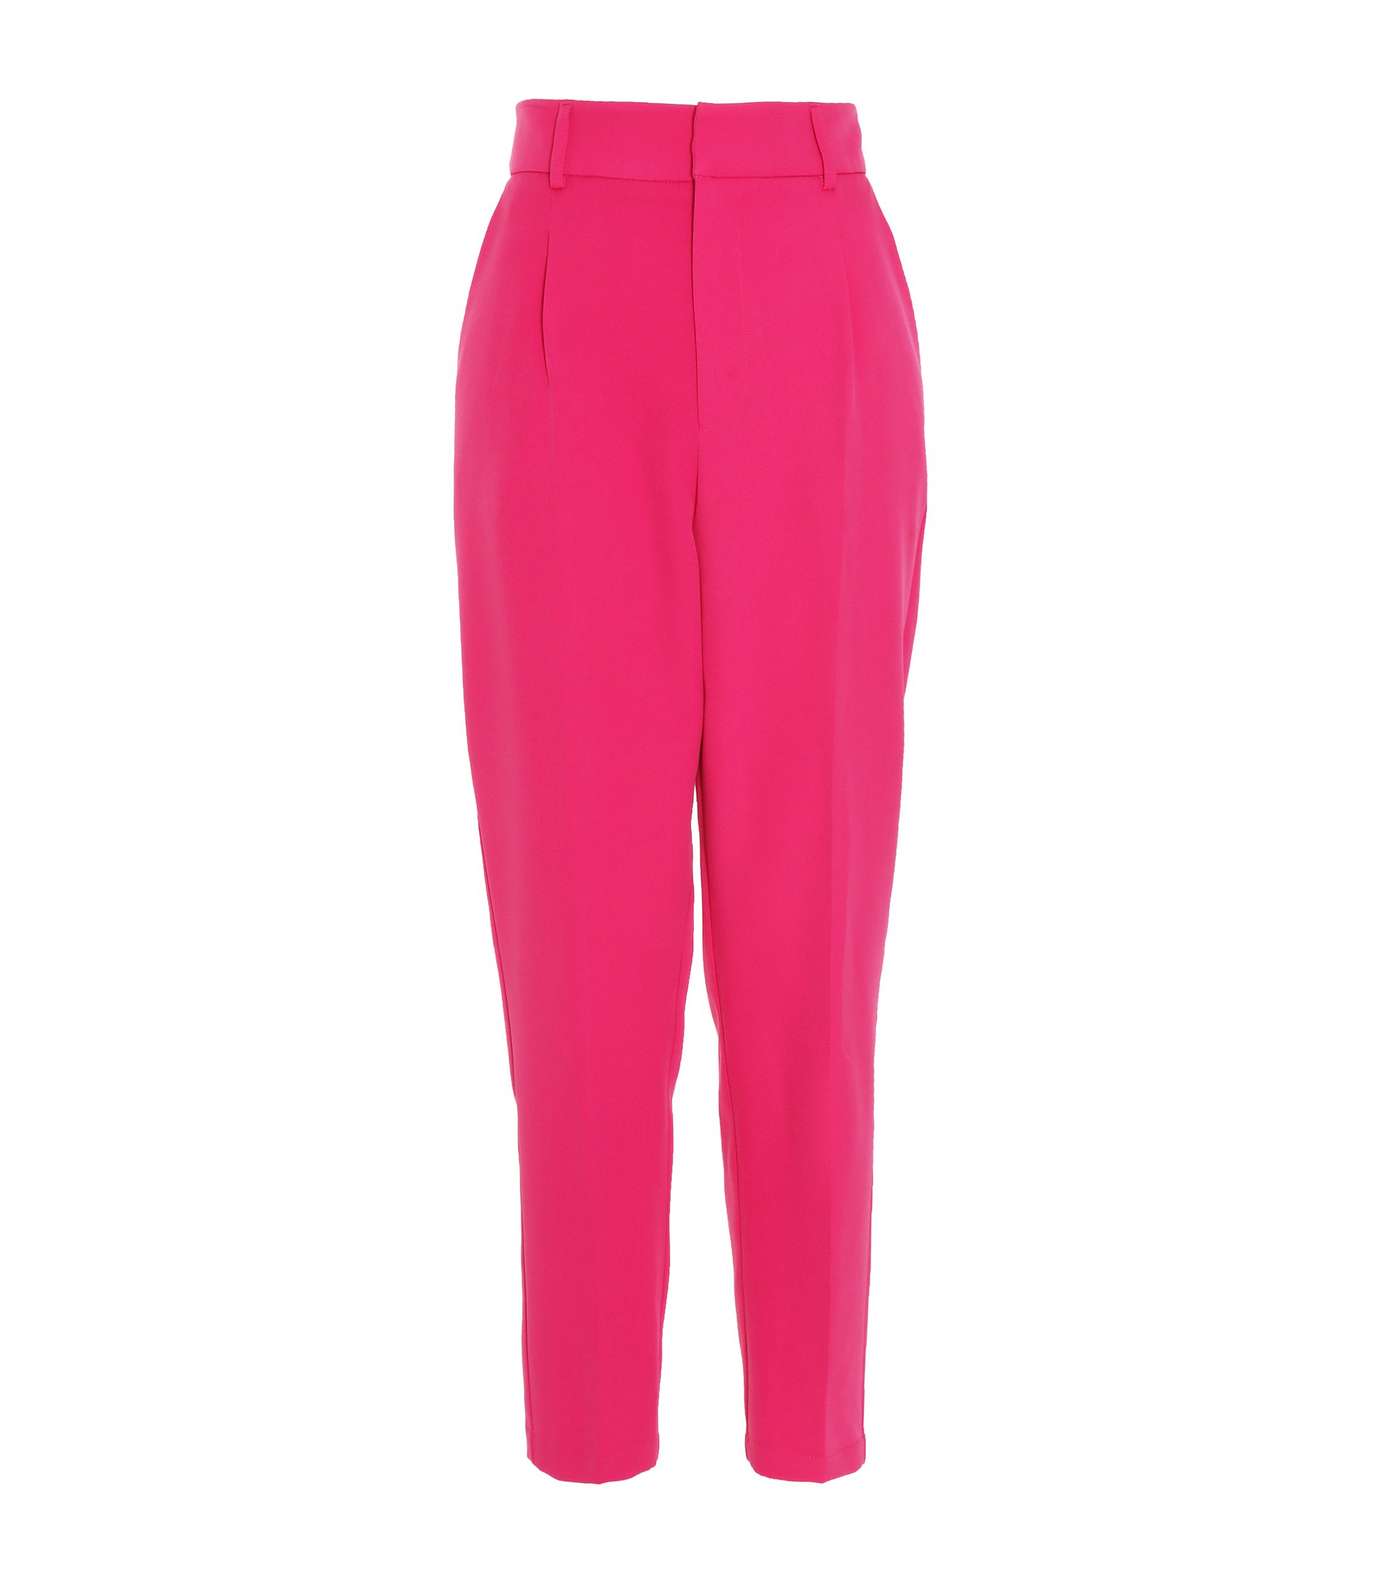 QUIZ Bright Pink Slim Leg Trousers Image 4